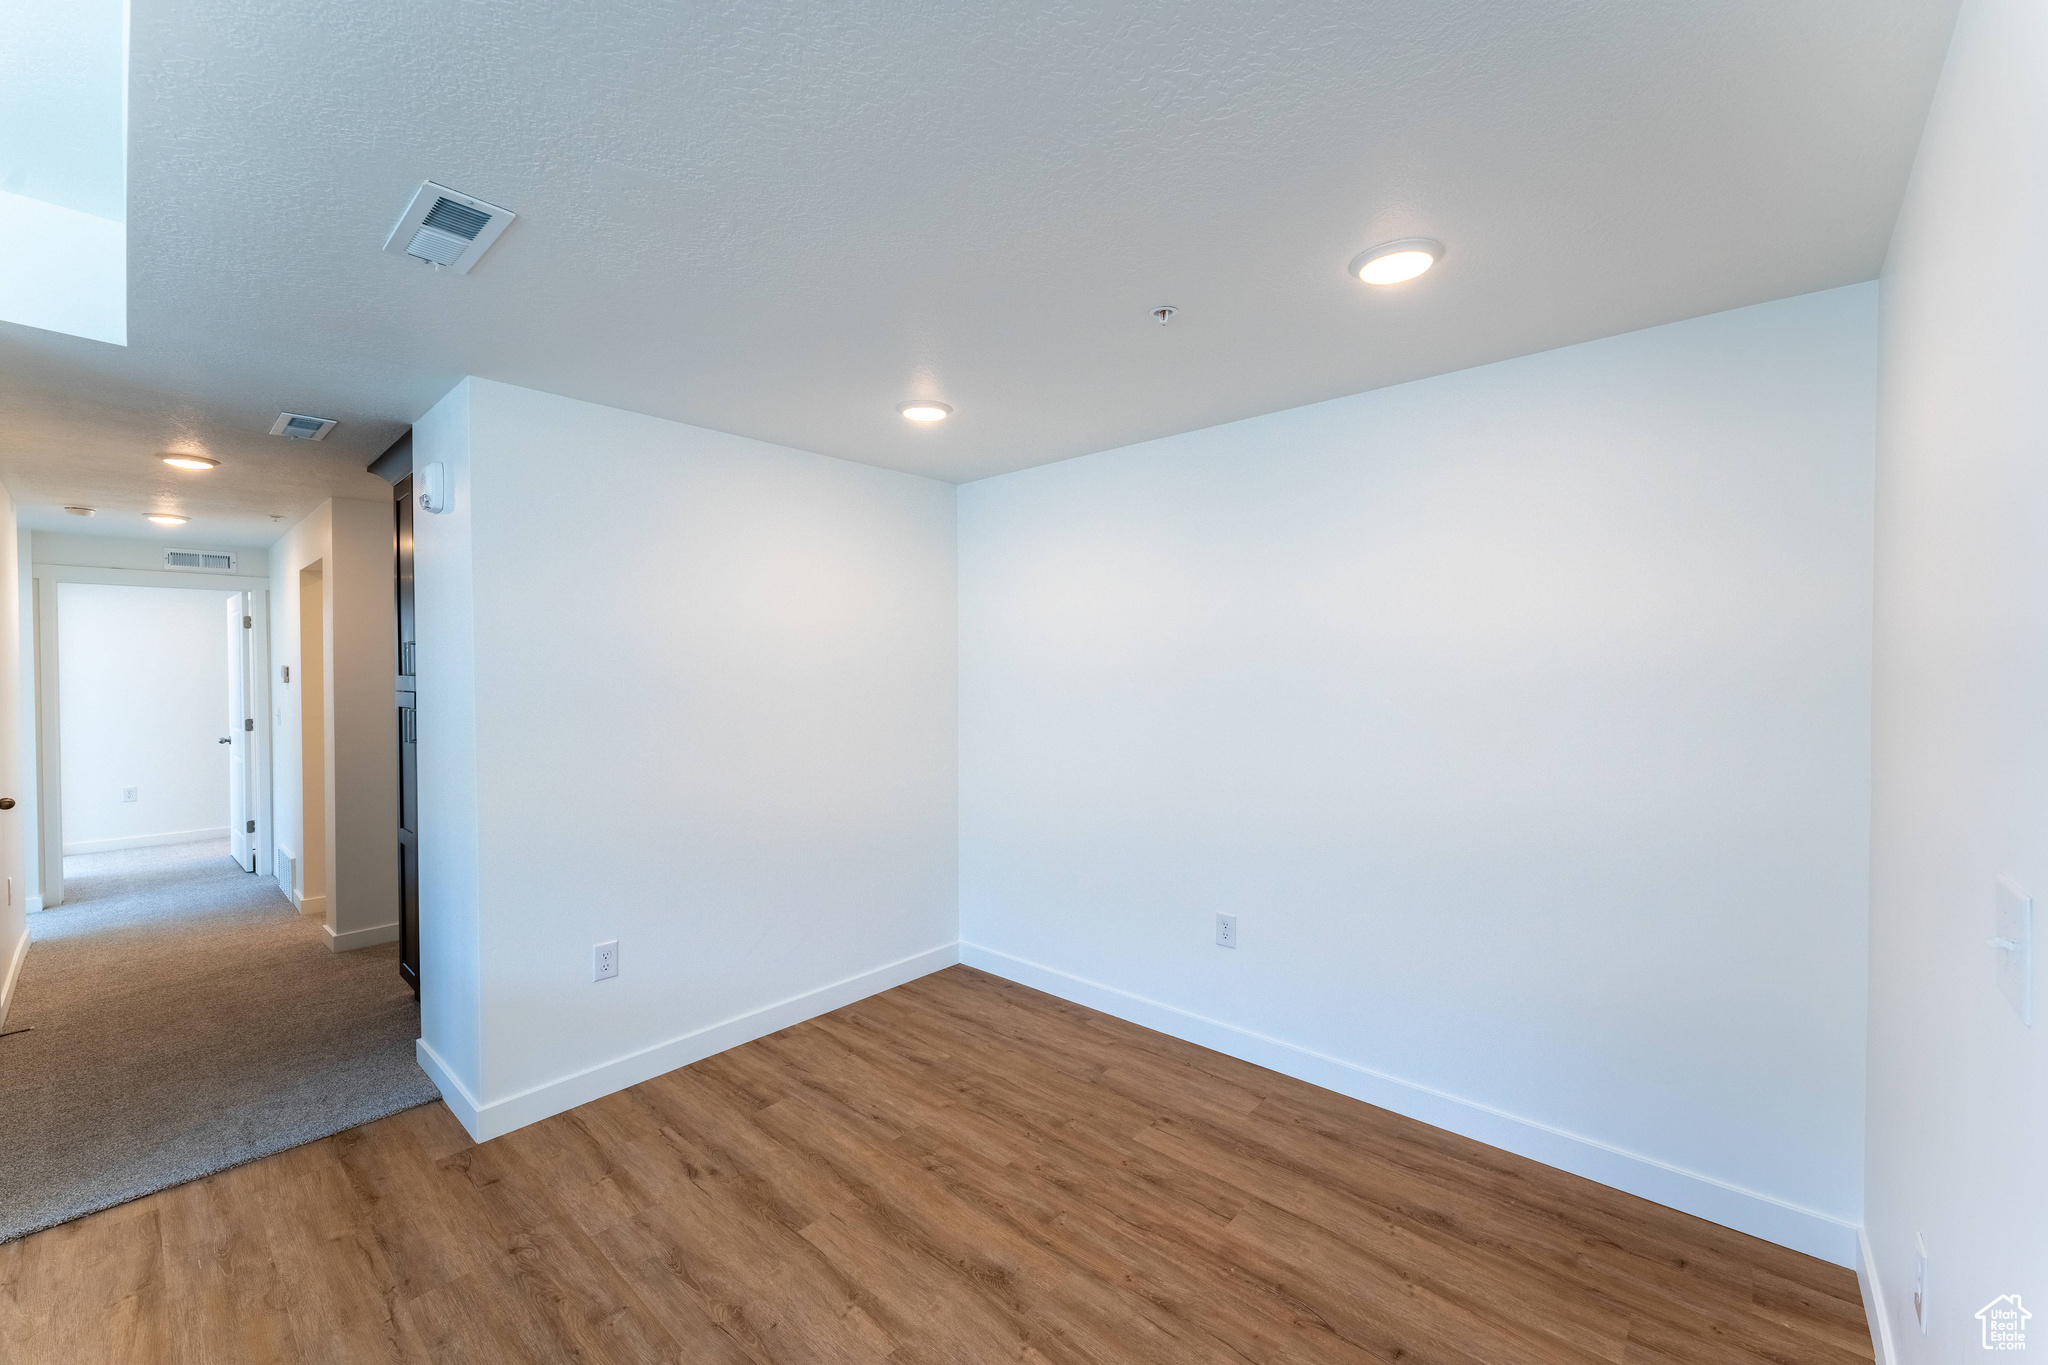 Spare room with hardwood / wood-style flooring